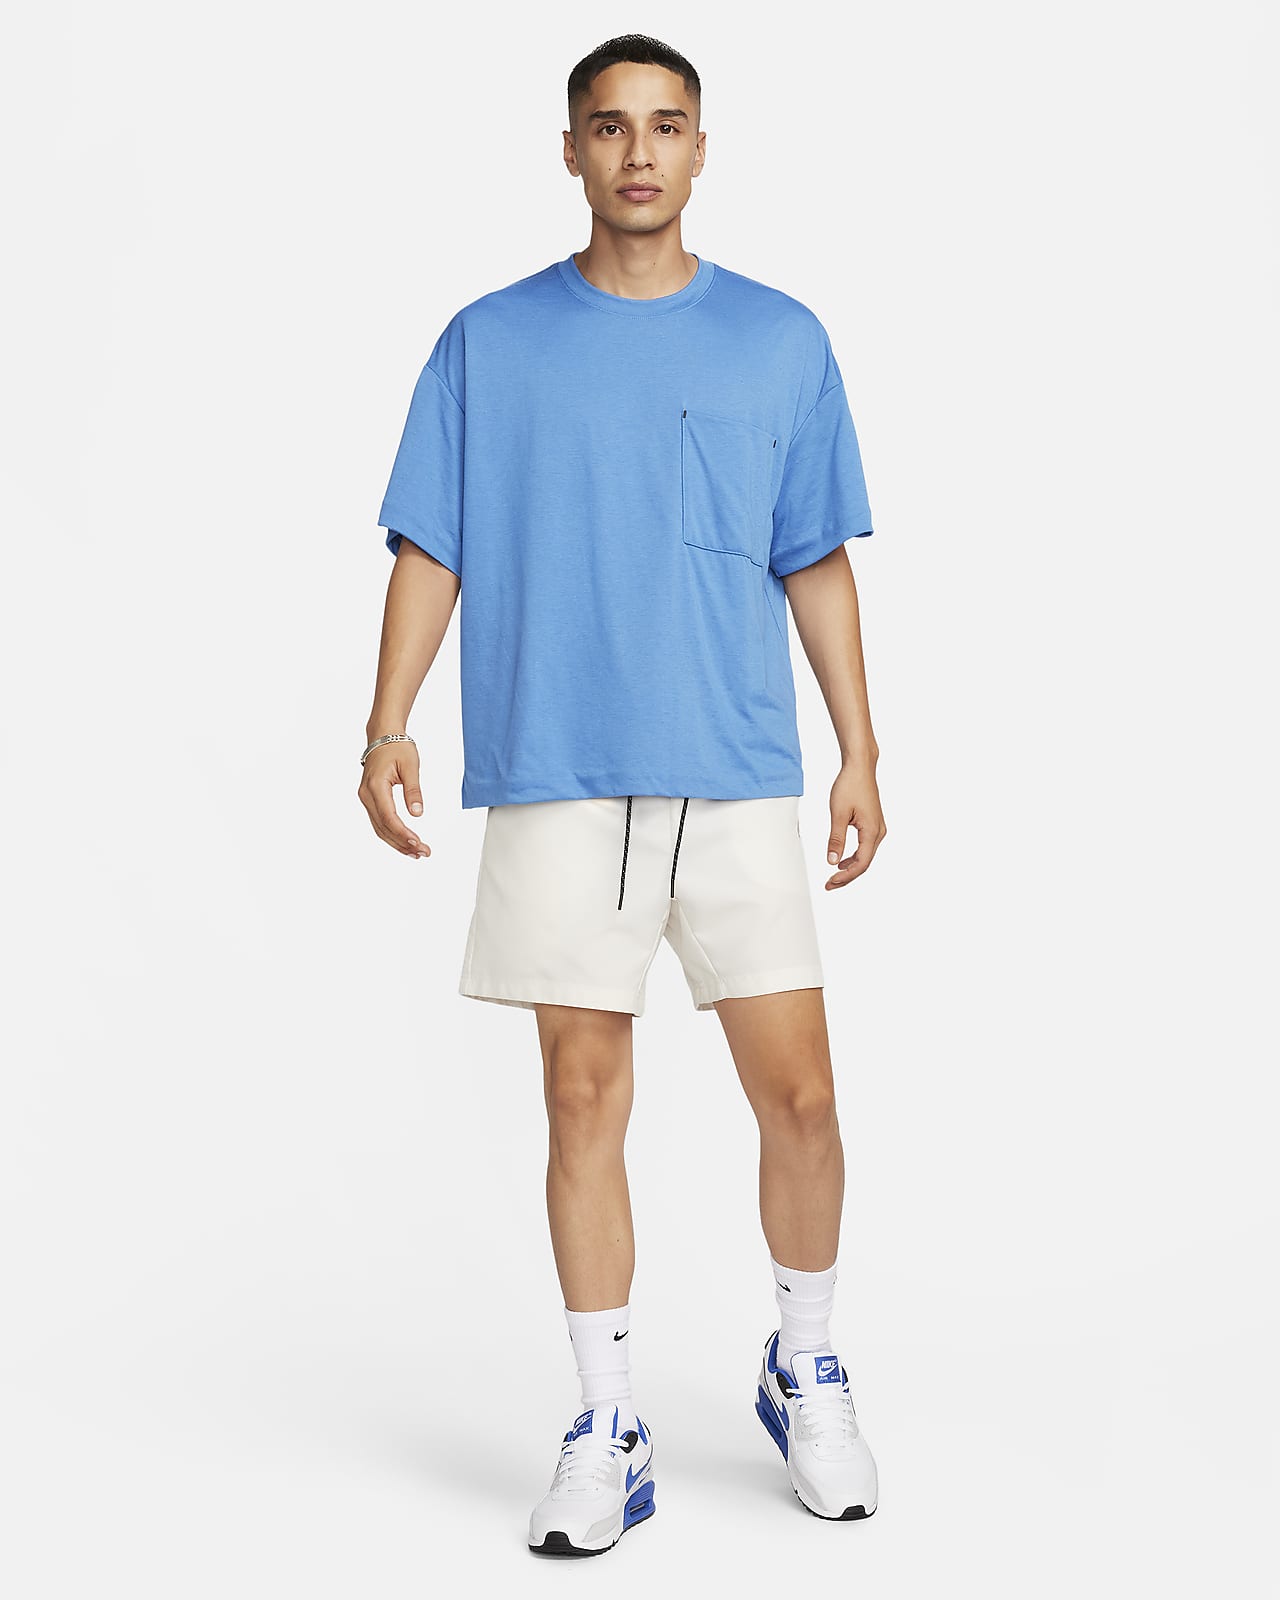 Men's Gym Tops & T-Shirts. Nike CA